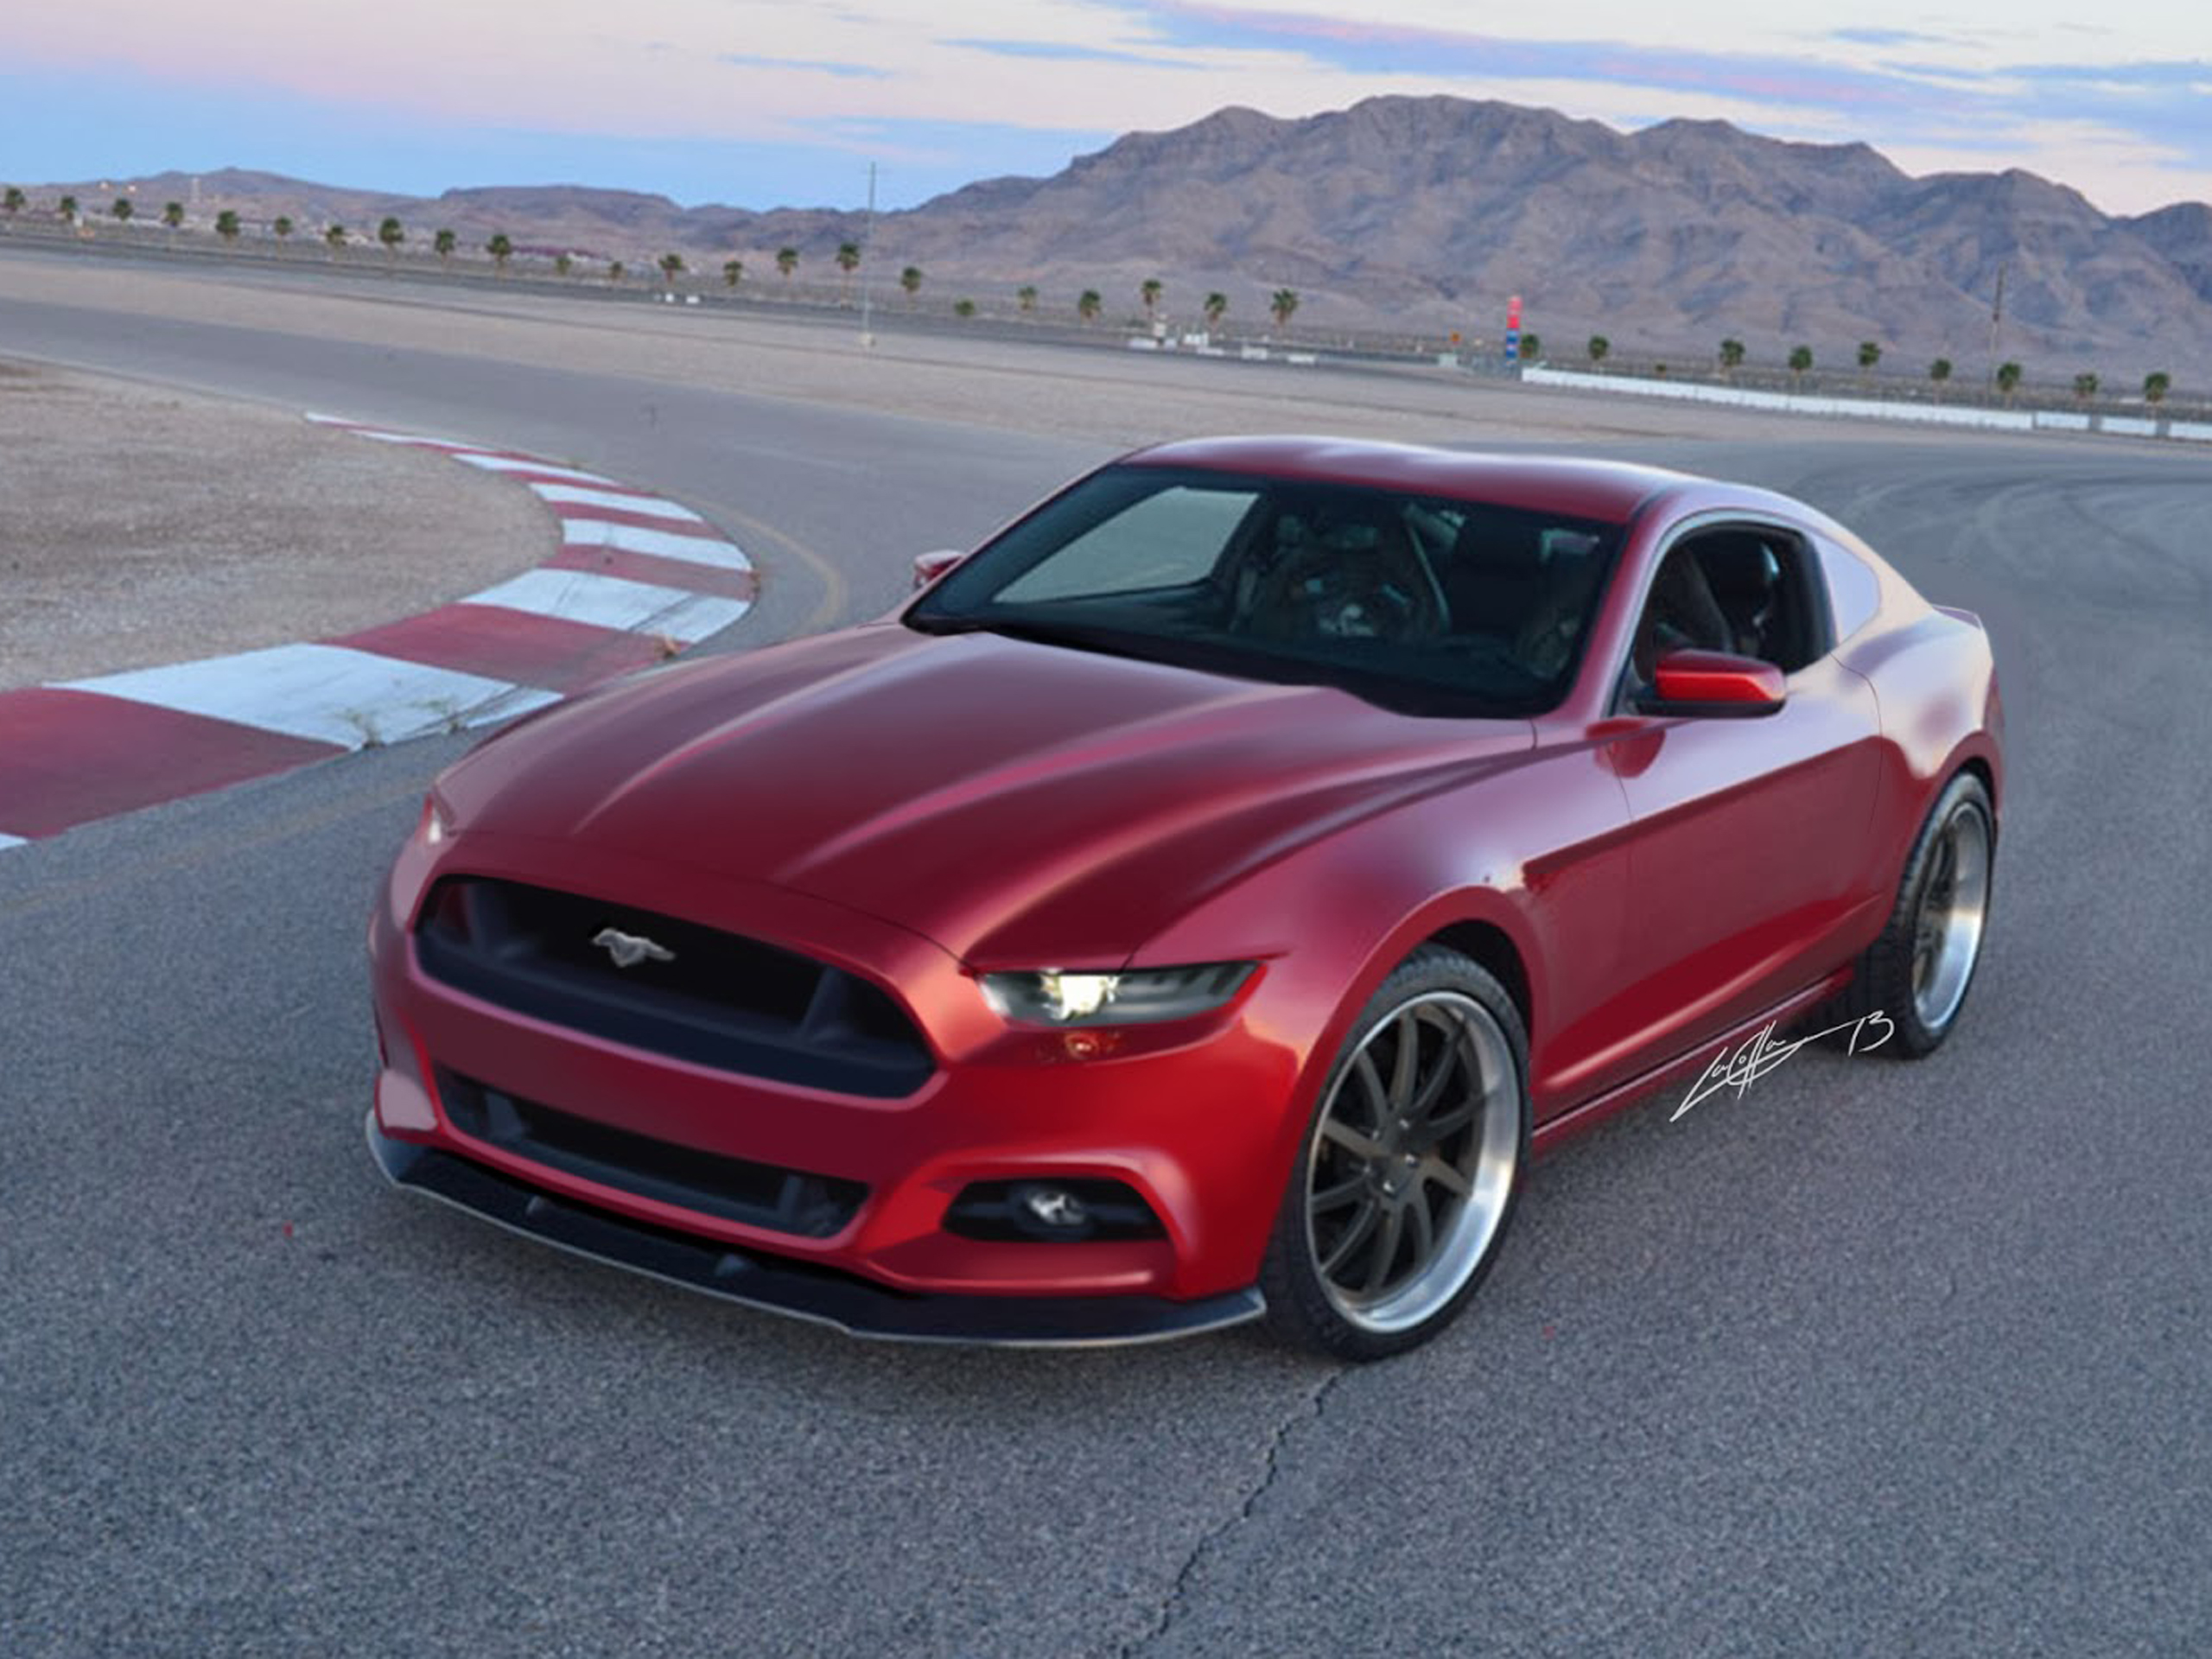 Ford Mustang 2014: Neue Generation kommt auch zu uns